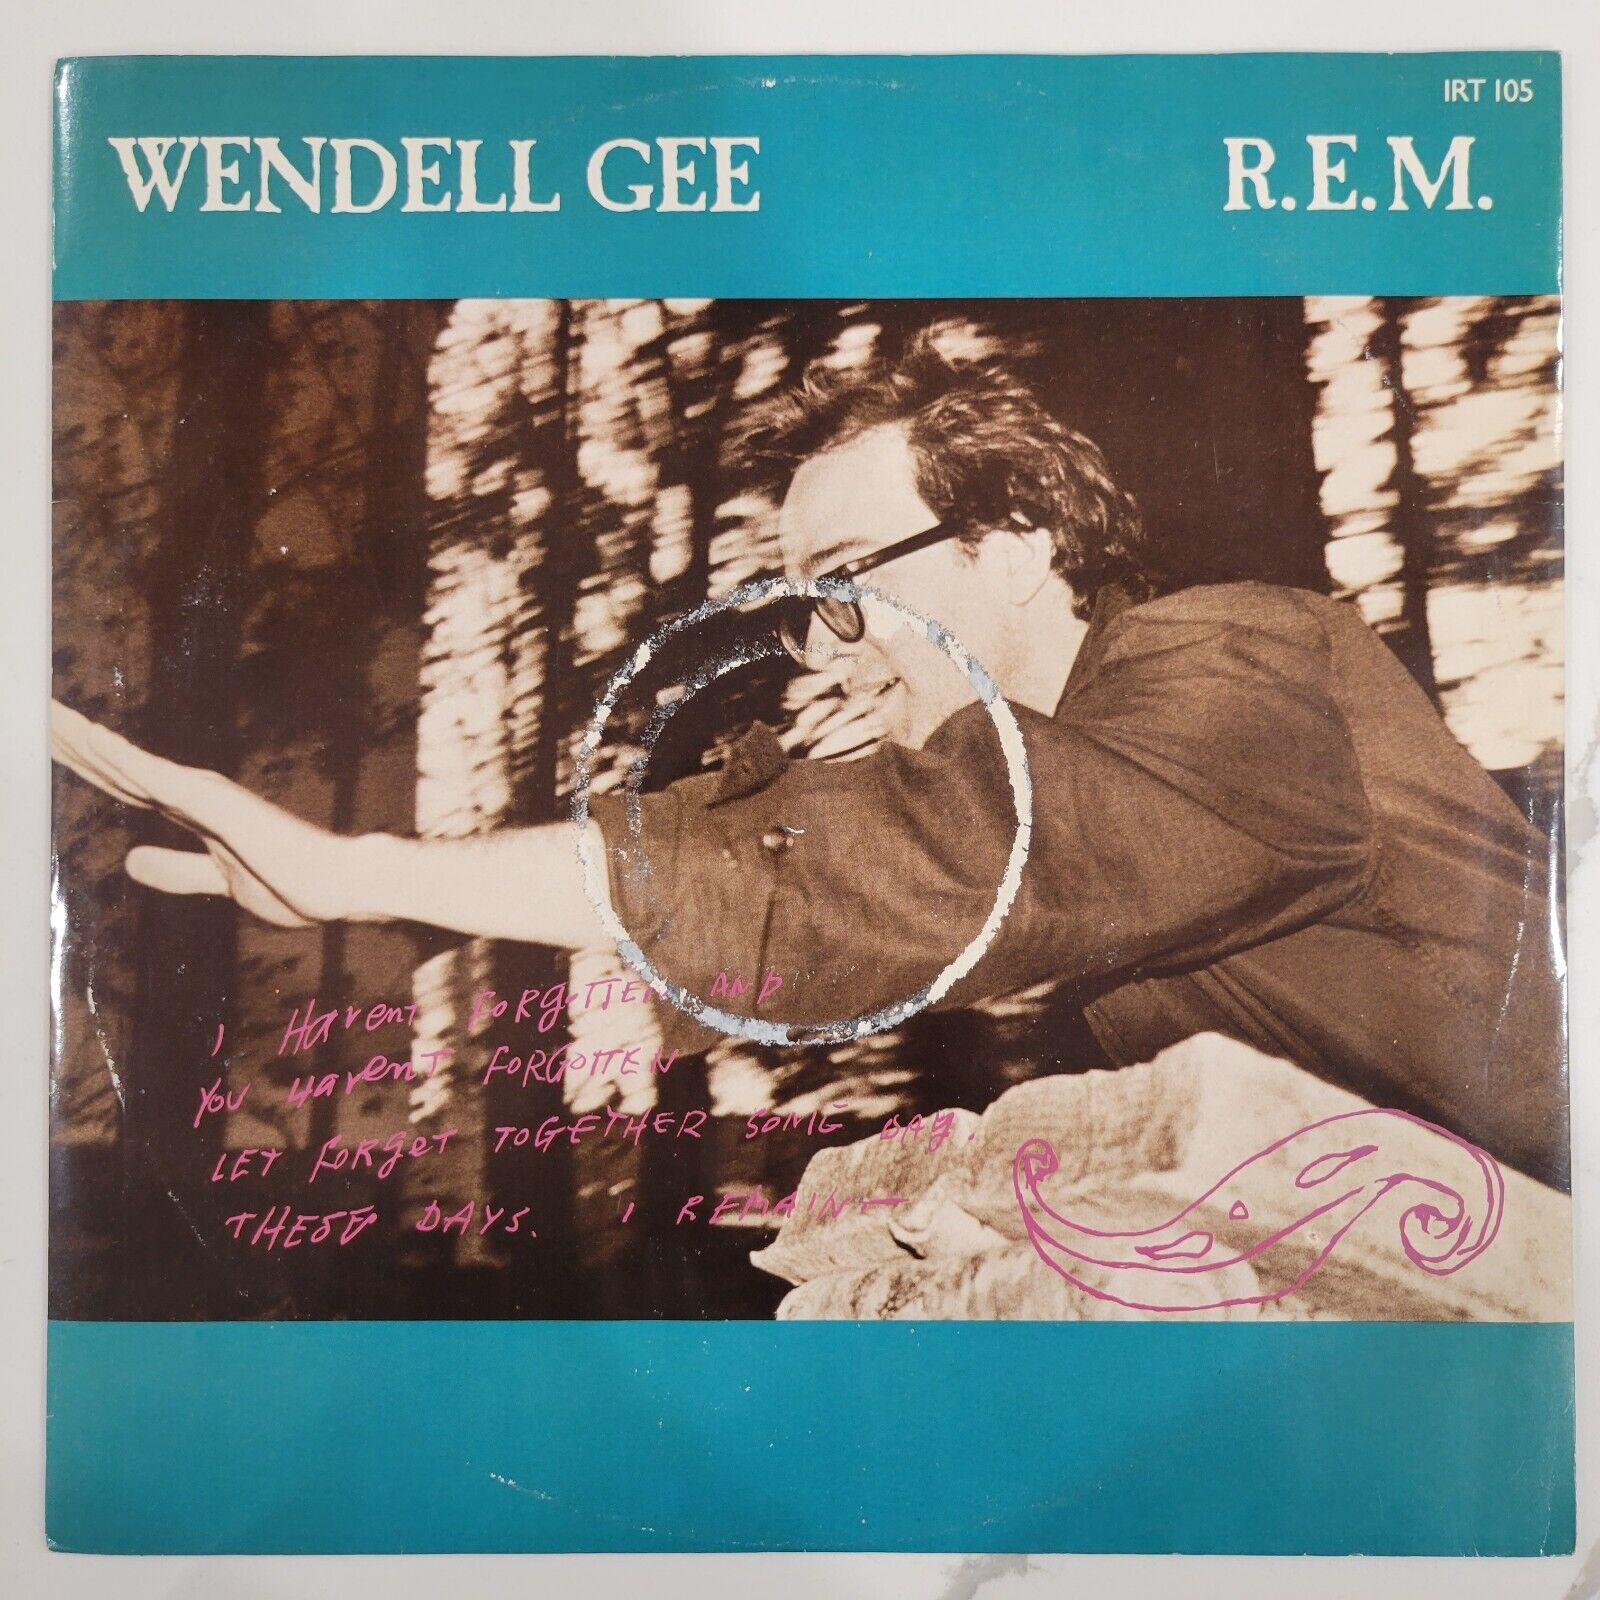 R.E.M. - Wendell Gee Vinyl Single - 1985 - UK Import - IRS Records IRT 105